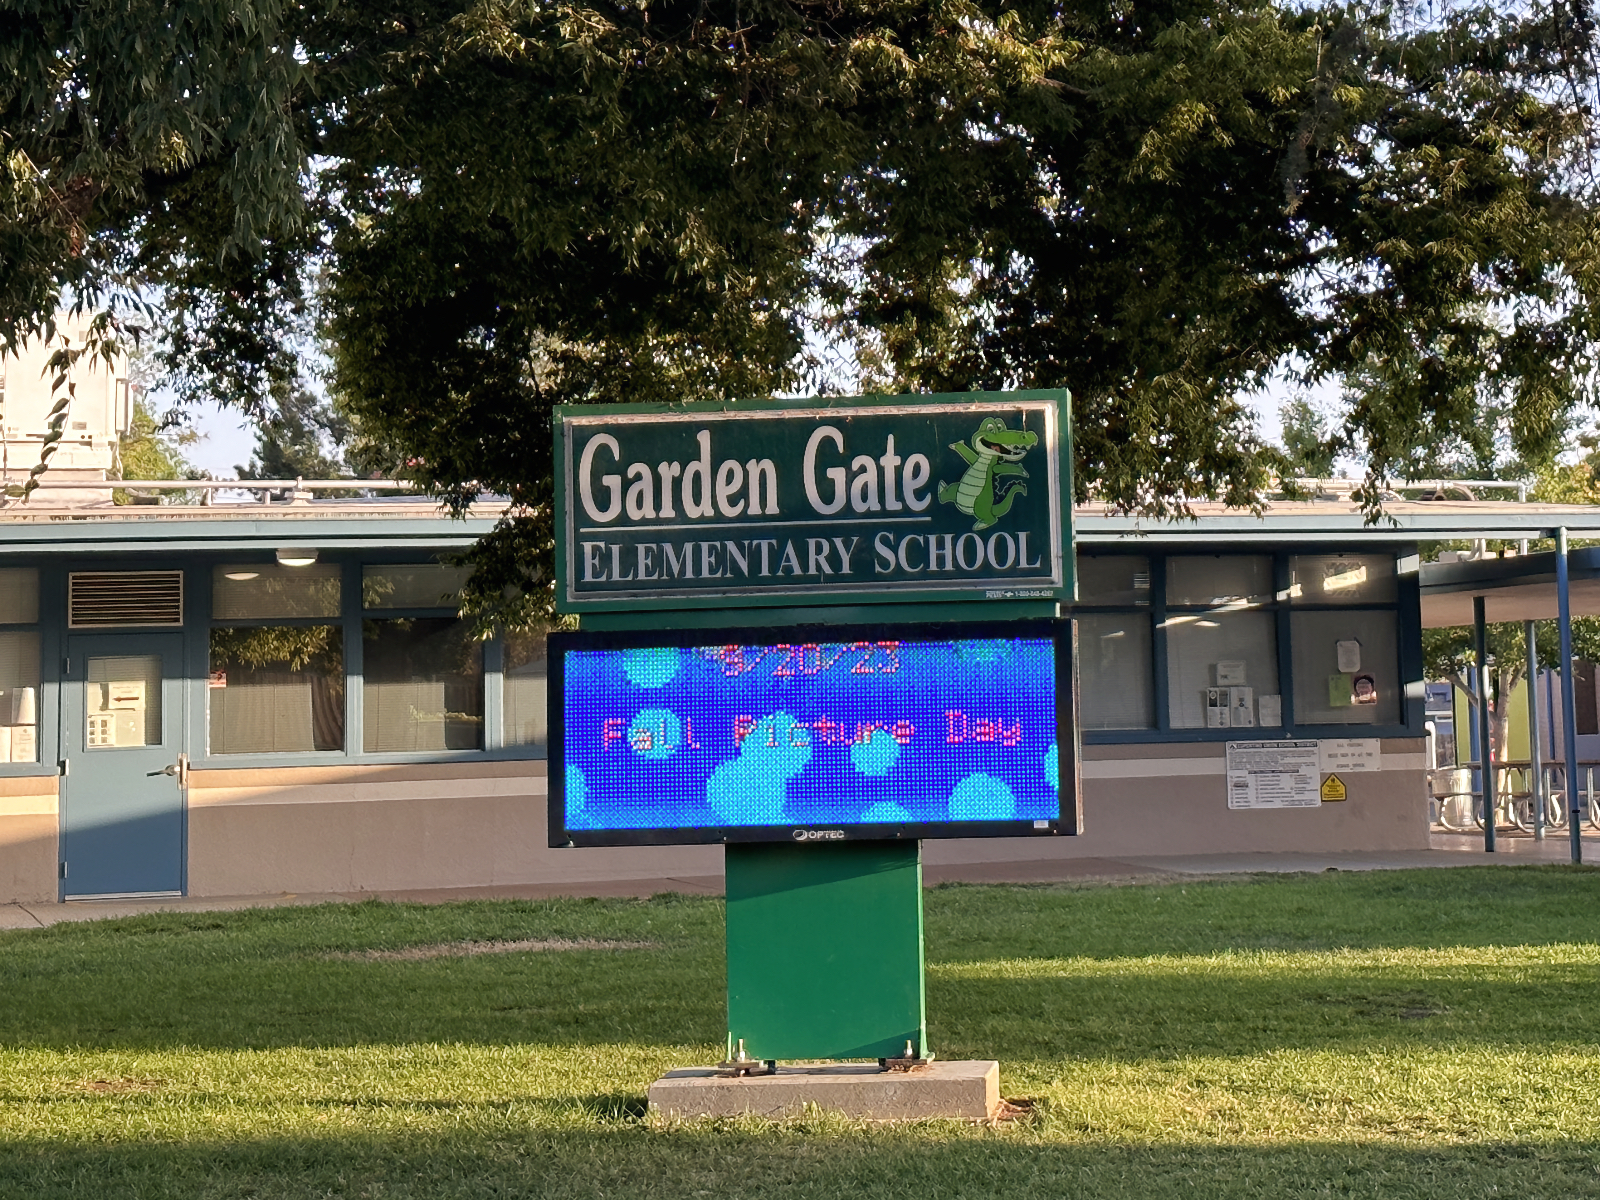 Garden Gate Elementary School in Cupertino